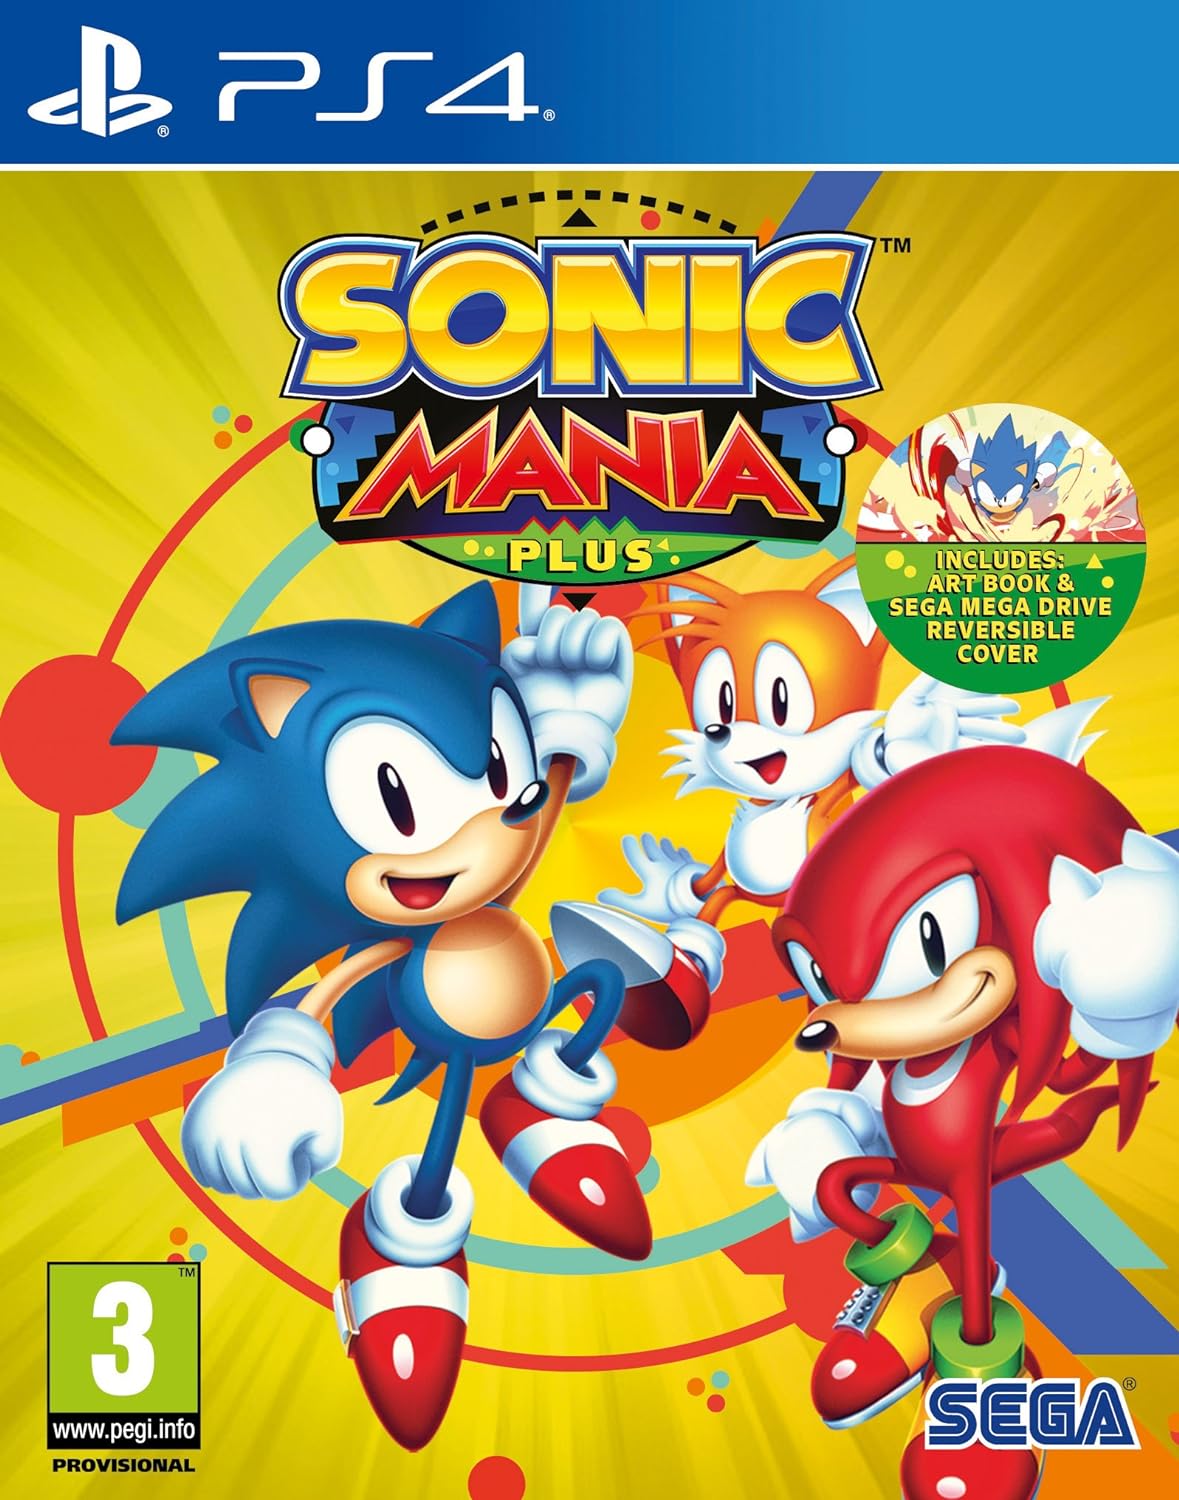 PS4-Sonic-Mania-Plus-tech-junction-storer